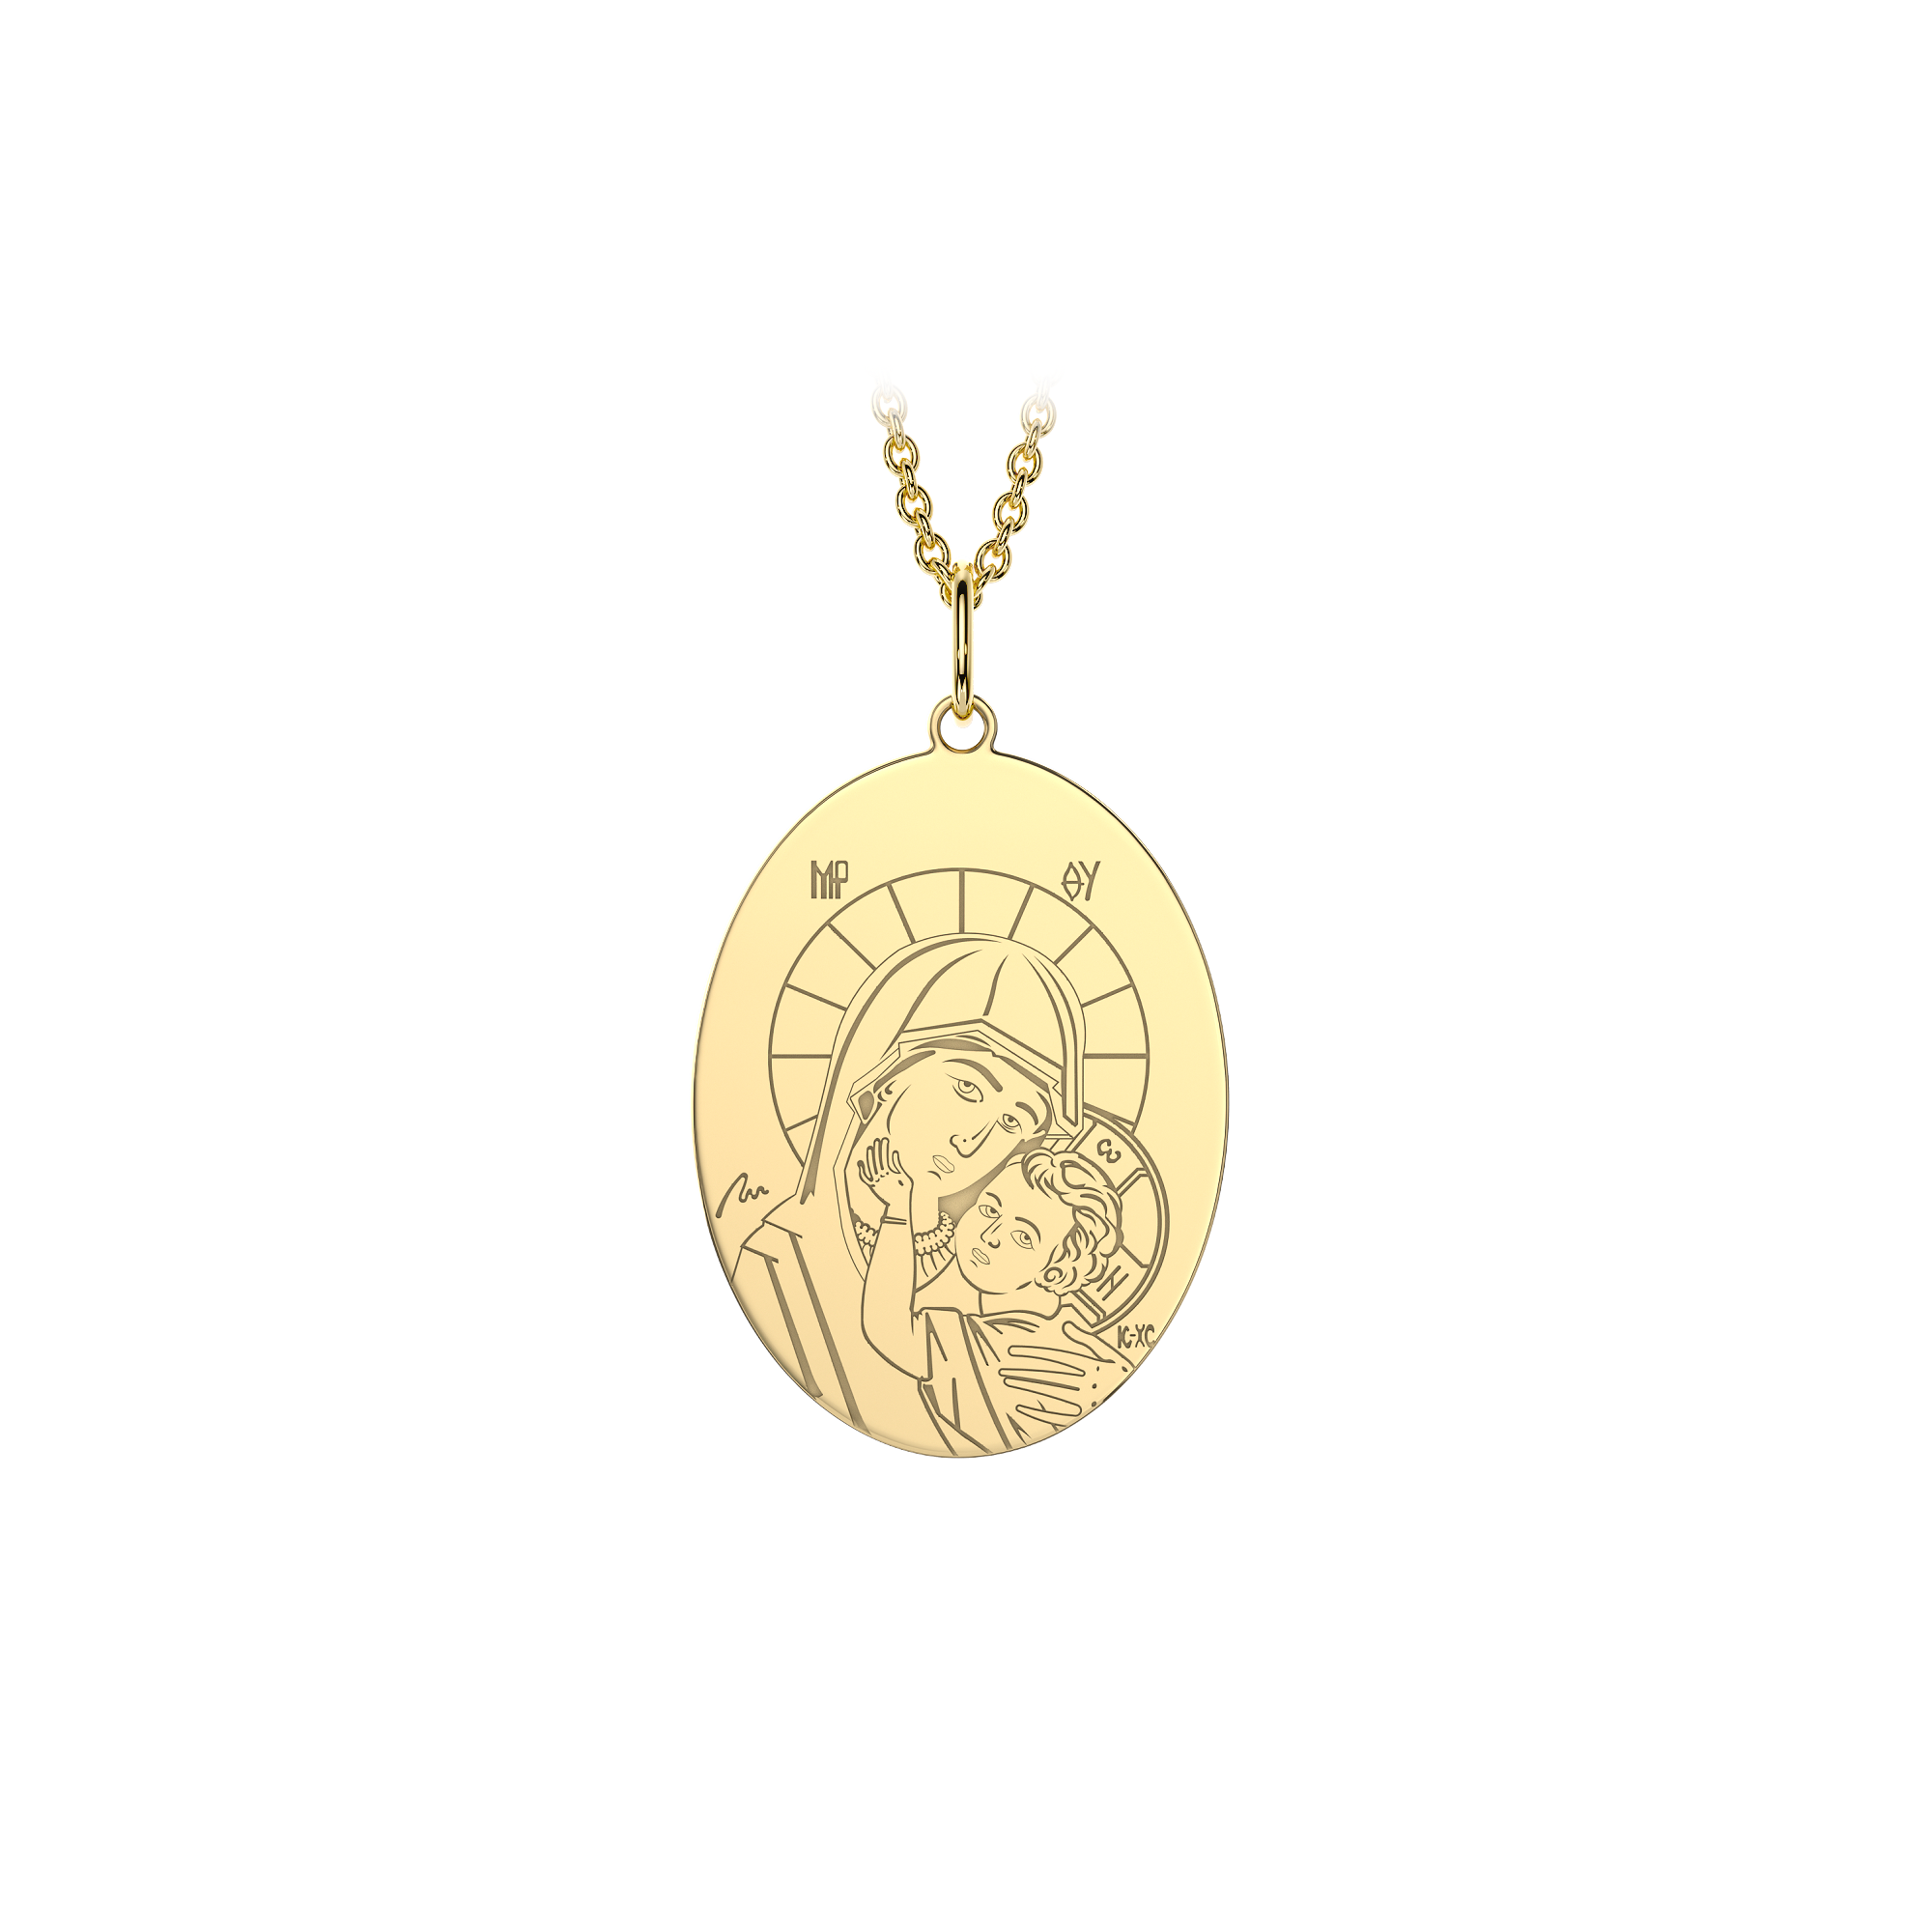 14 k yellow gold Virgin Mary pendant